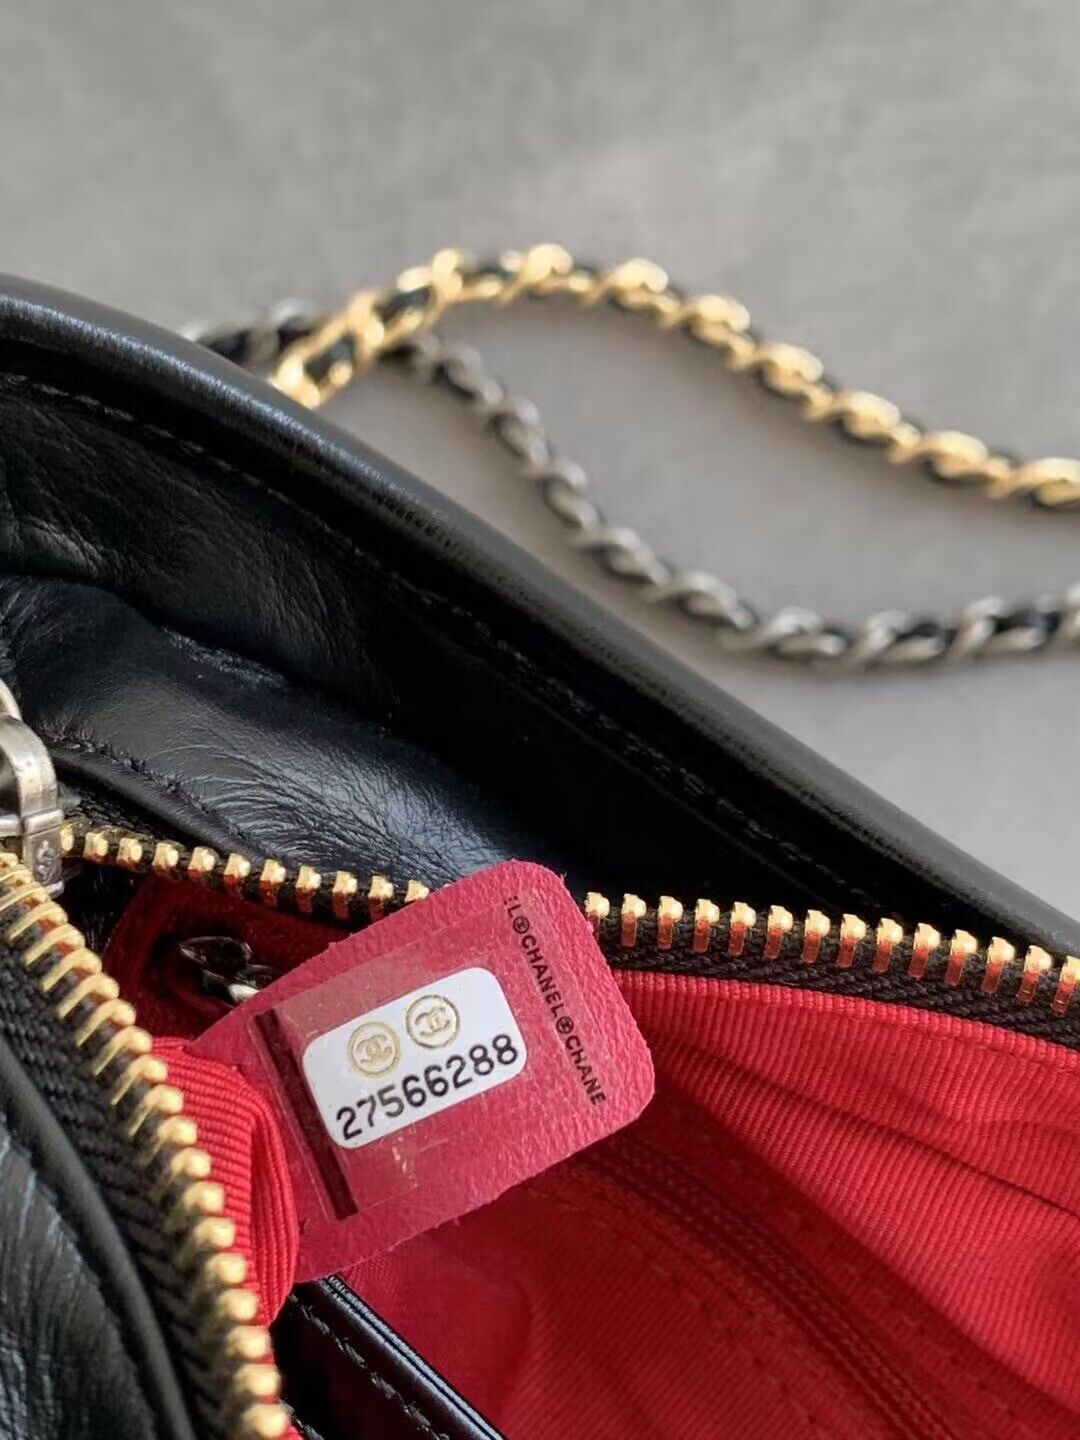 Chanel gabrielle small hobo bag A91810 Black